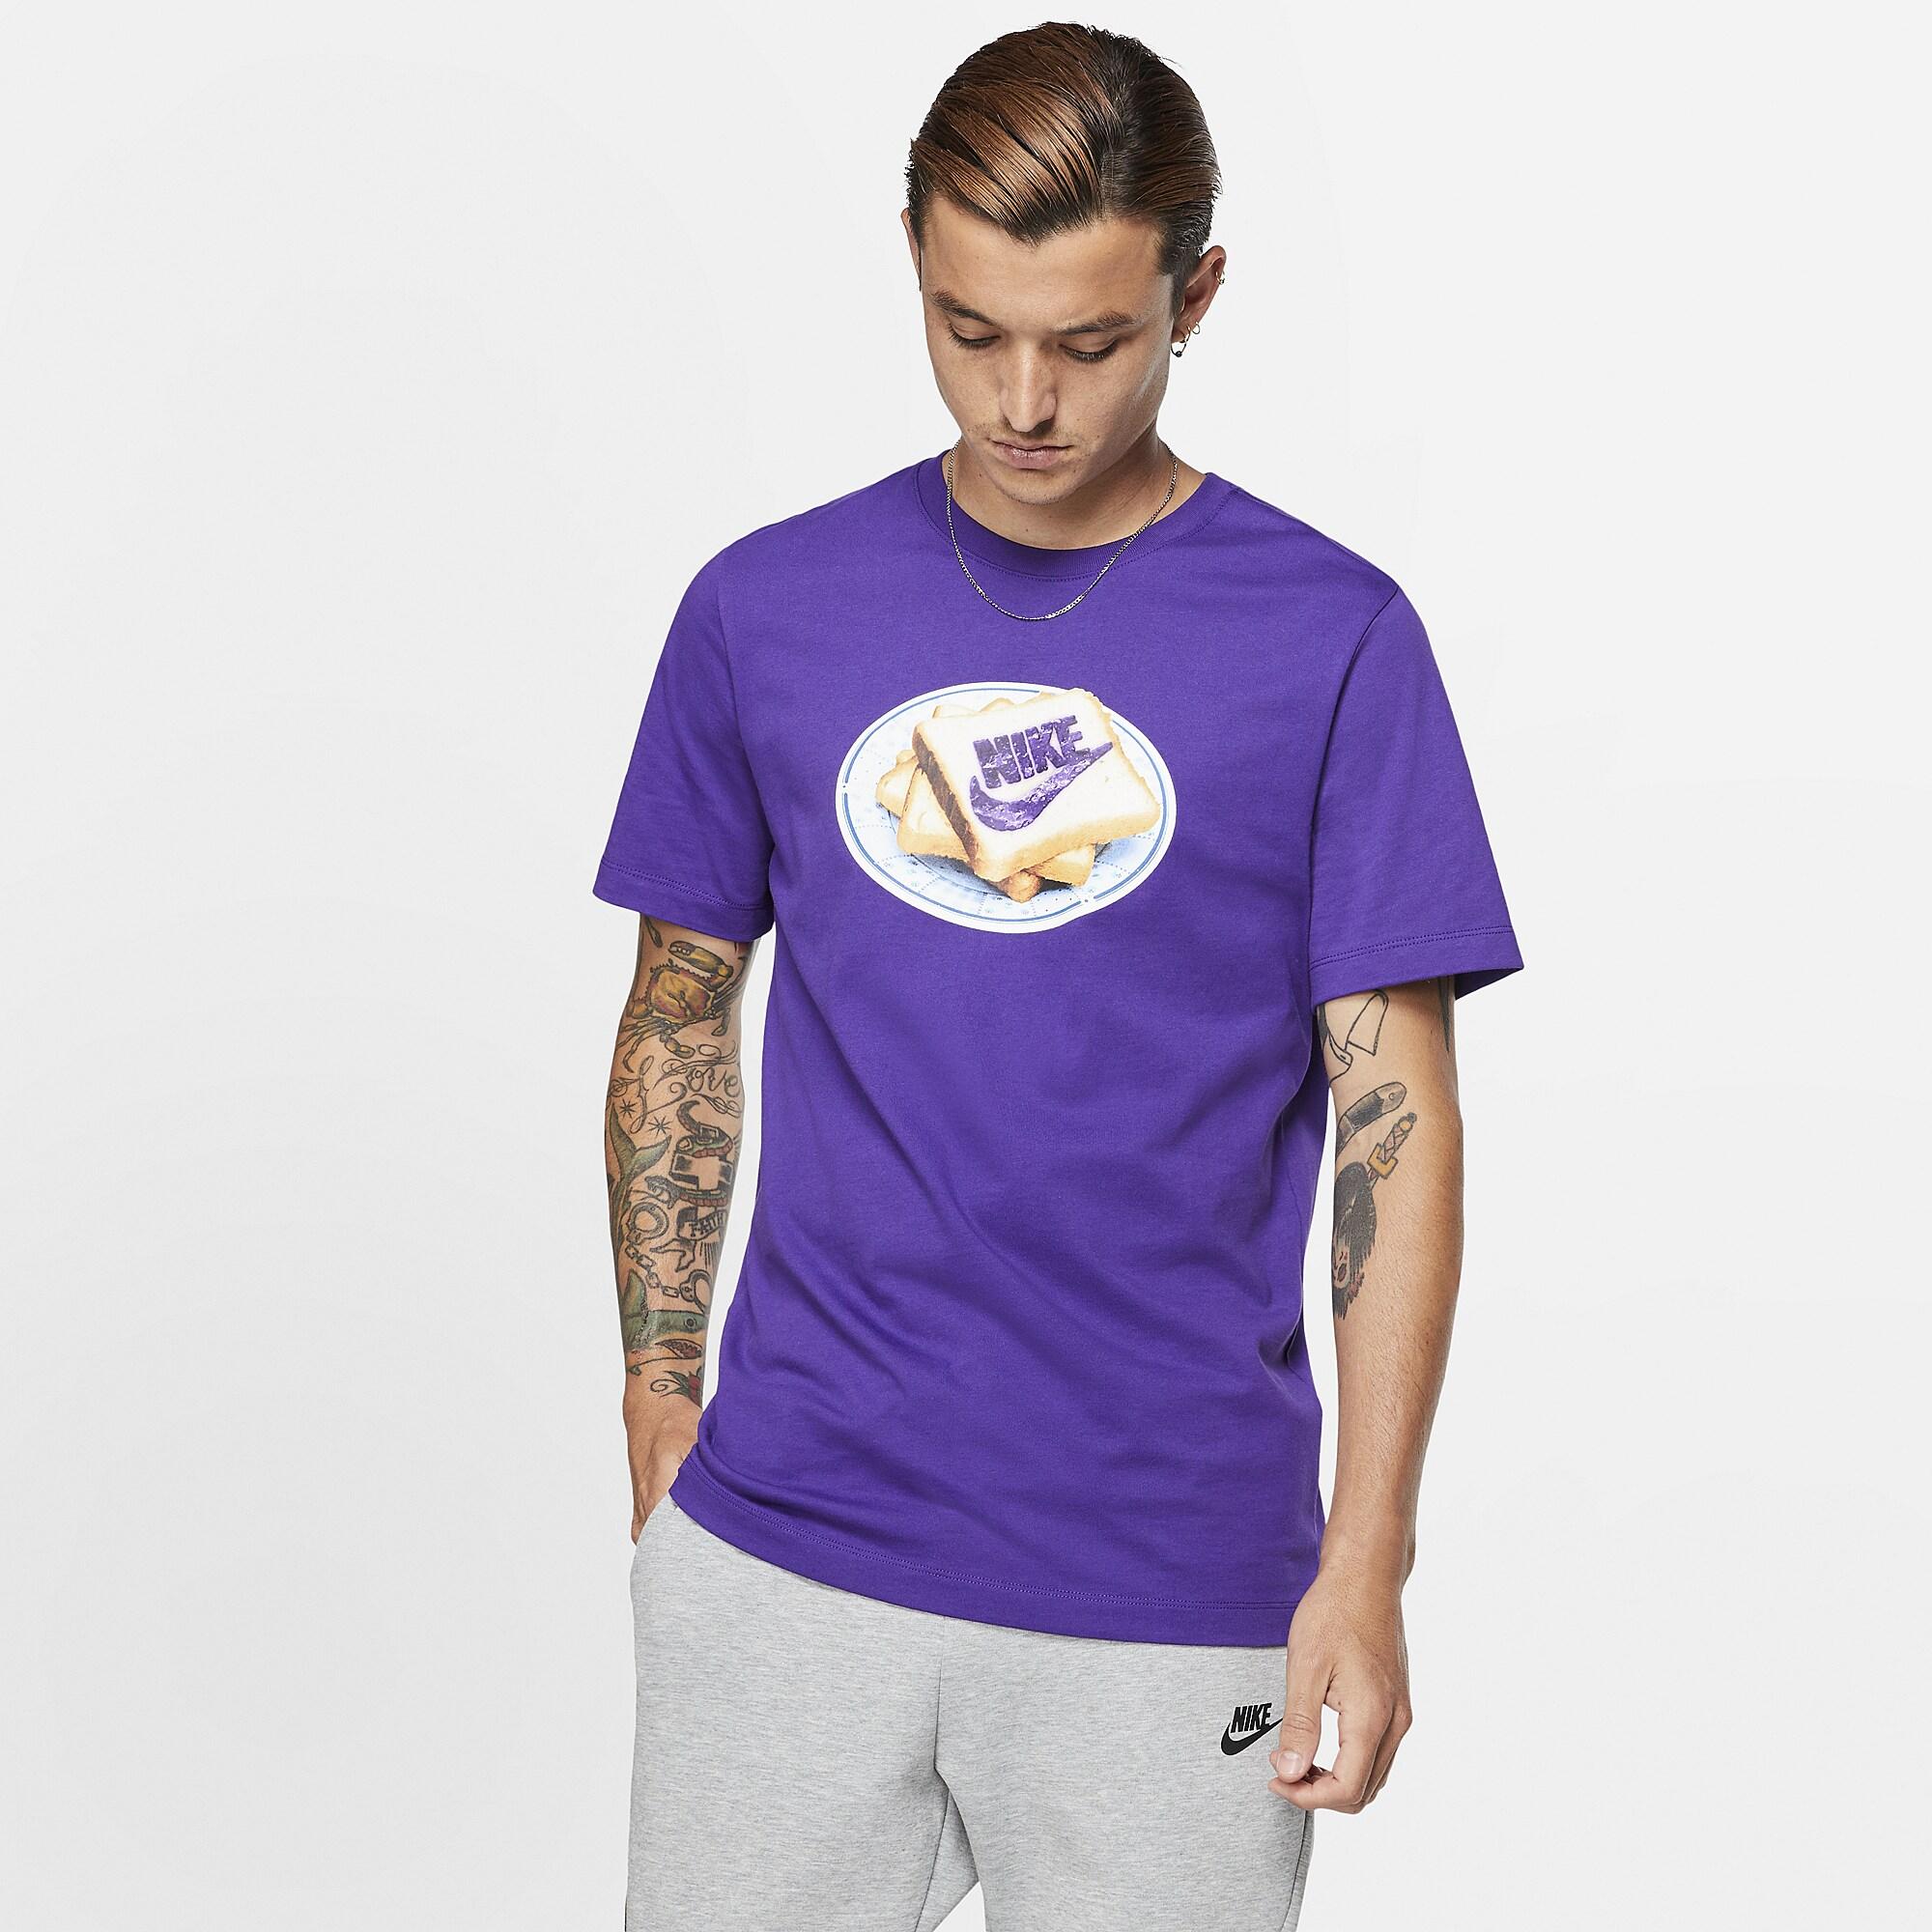 Nike Cotton Purple Jewel T-shirt for Men - Lyst